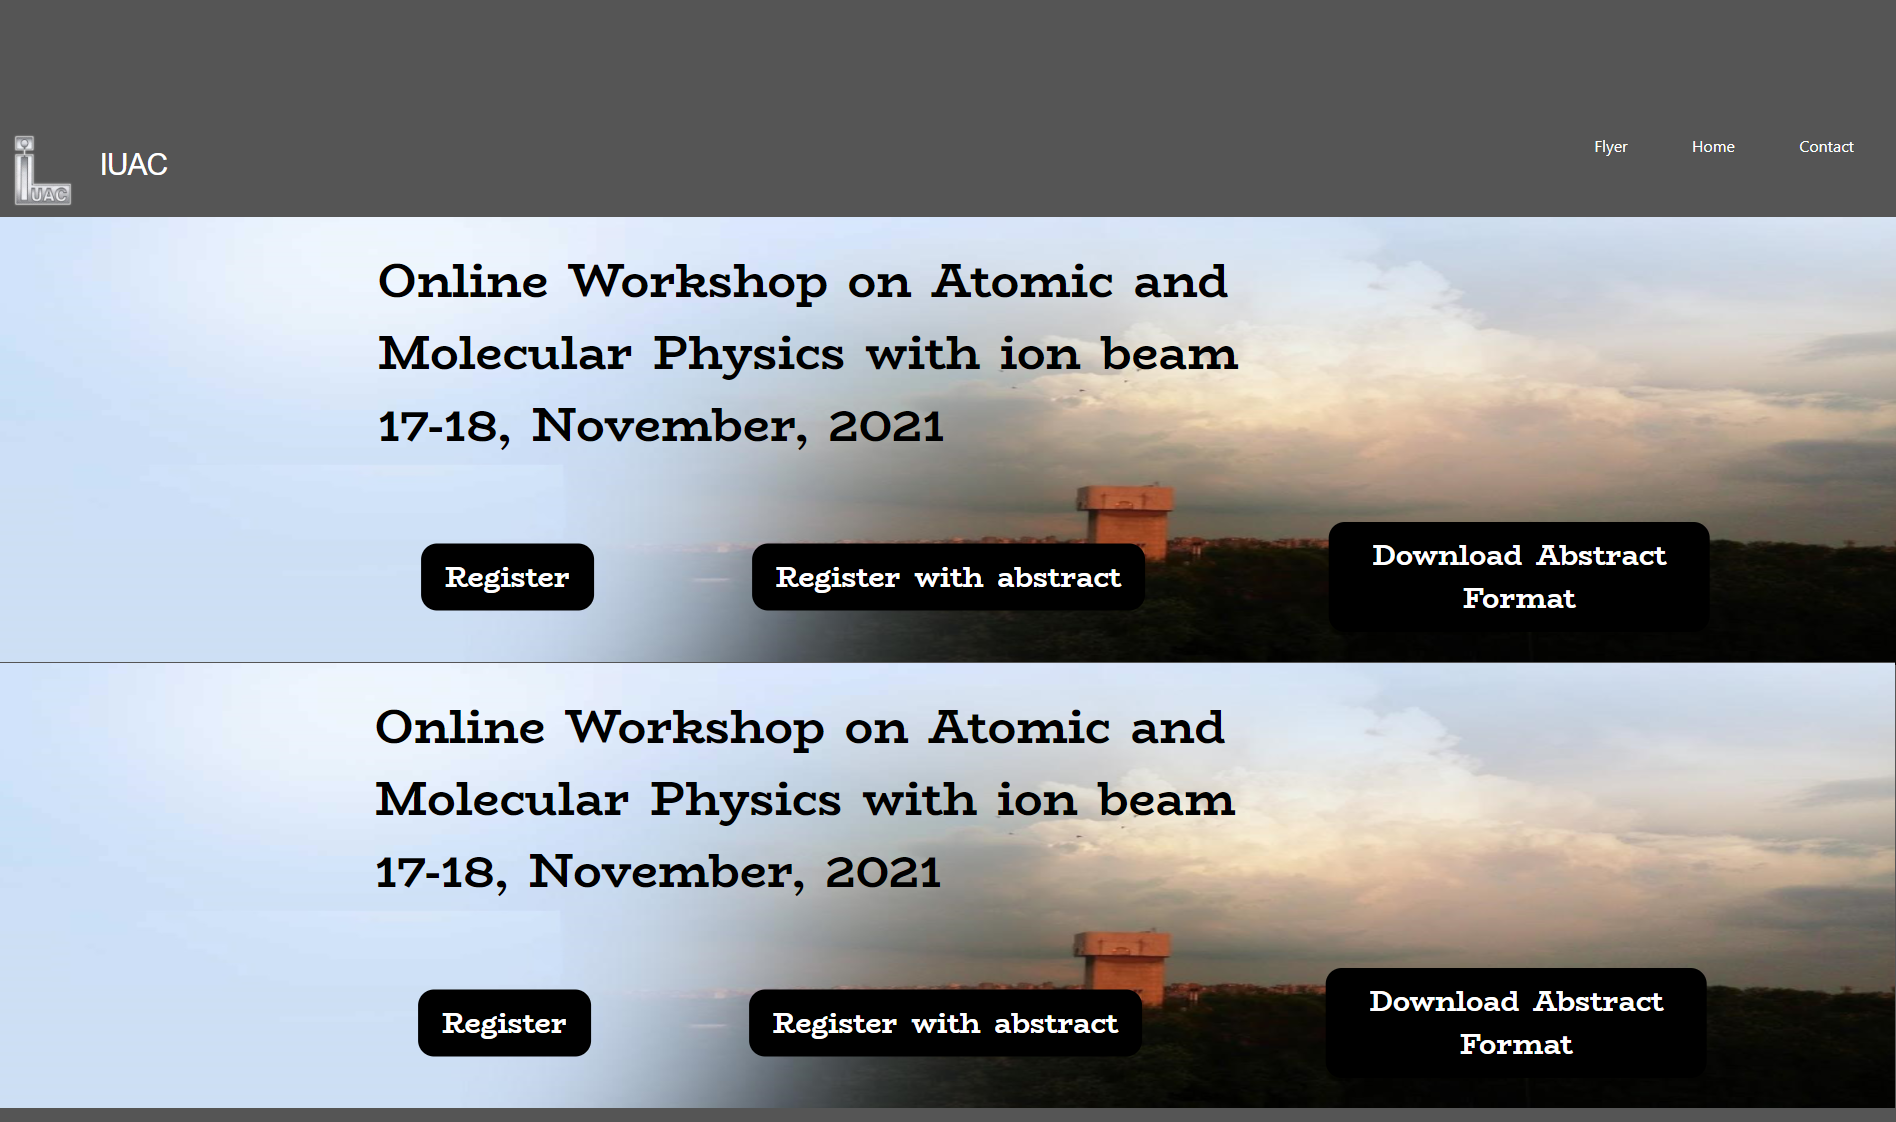 A workshop on Atomic and Molecular Physics, 17-18 November 2021